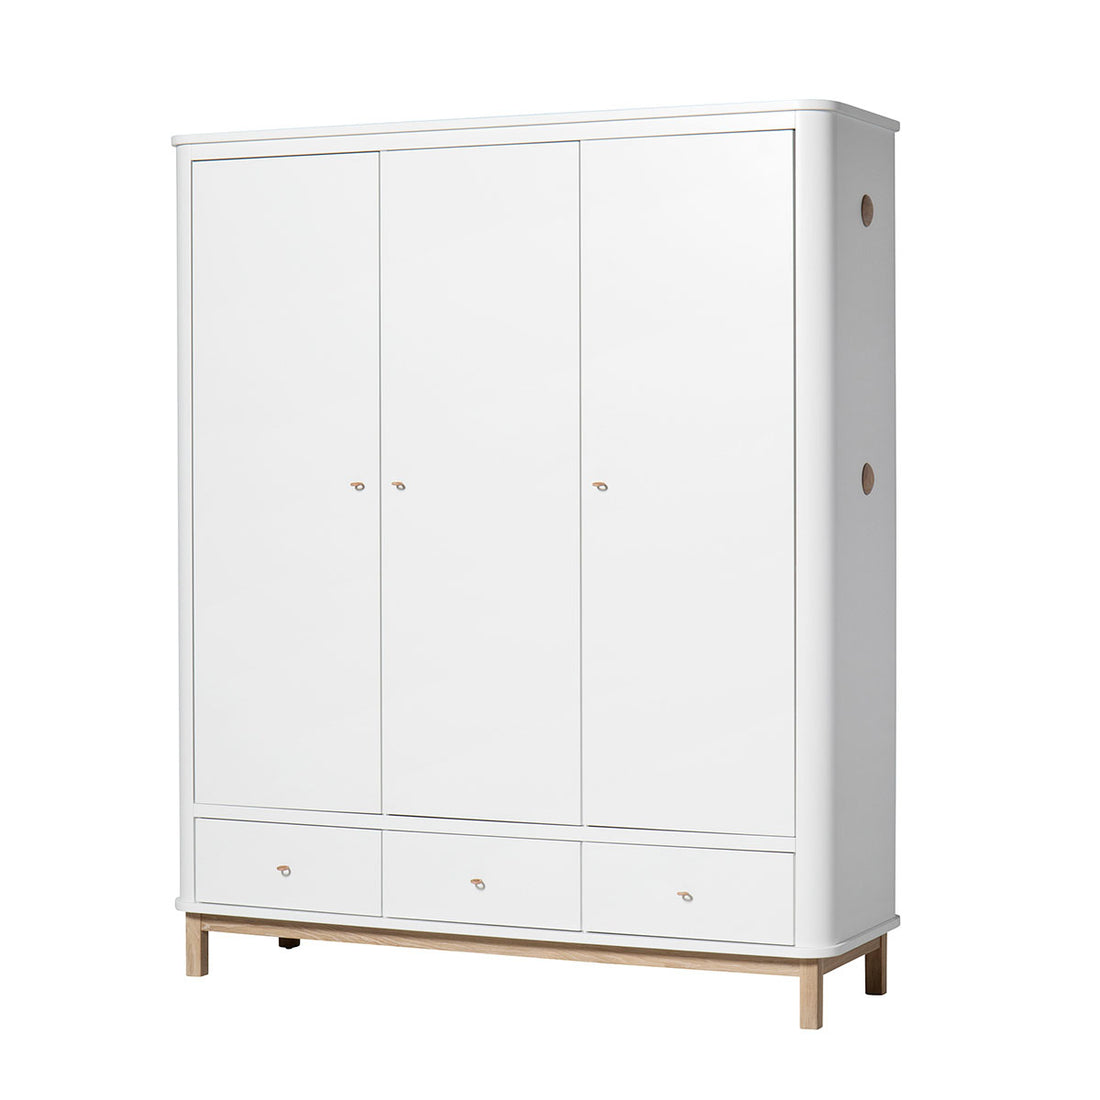 oliver-furniture-wood-wardrobe-3-doors-white-oak- (2)